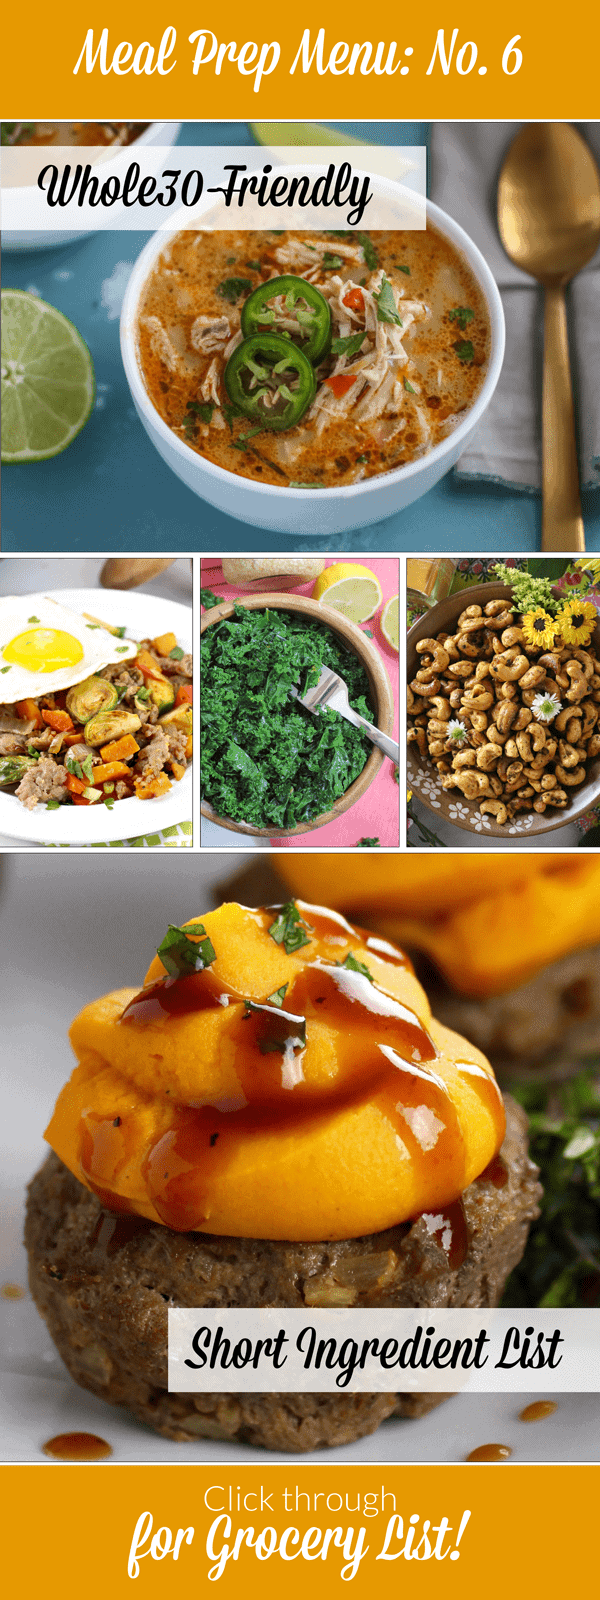 Weekly Meal Prep Menu: No. 6 | The Real Food Dietitians | https://therealfooddietitians.com/weekly-meal-prep-menu-no-6/